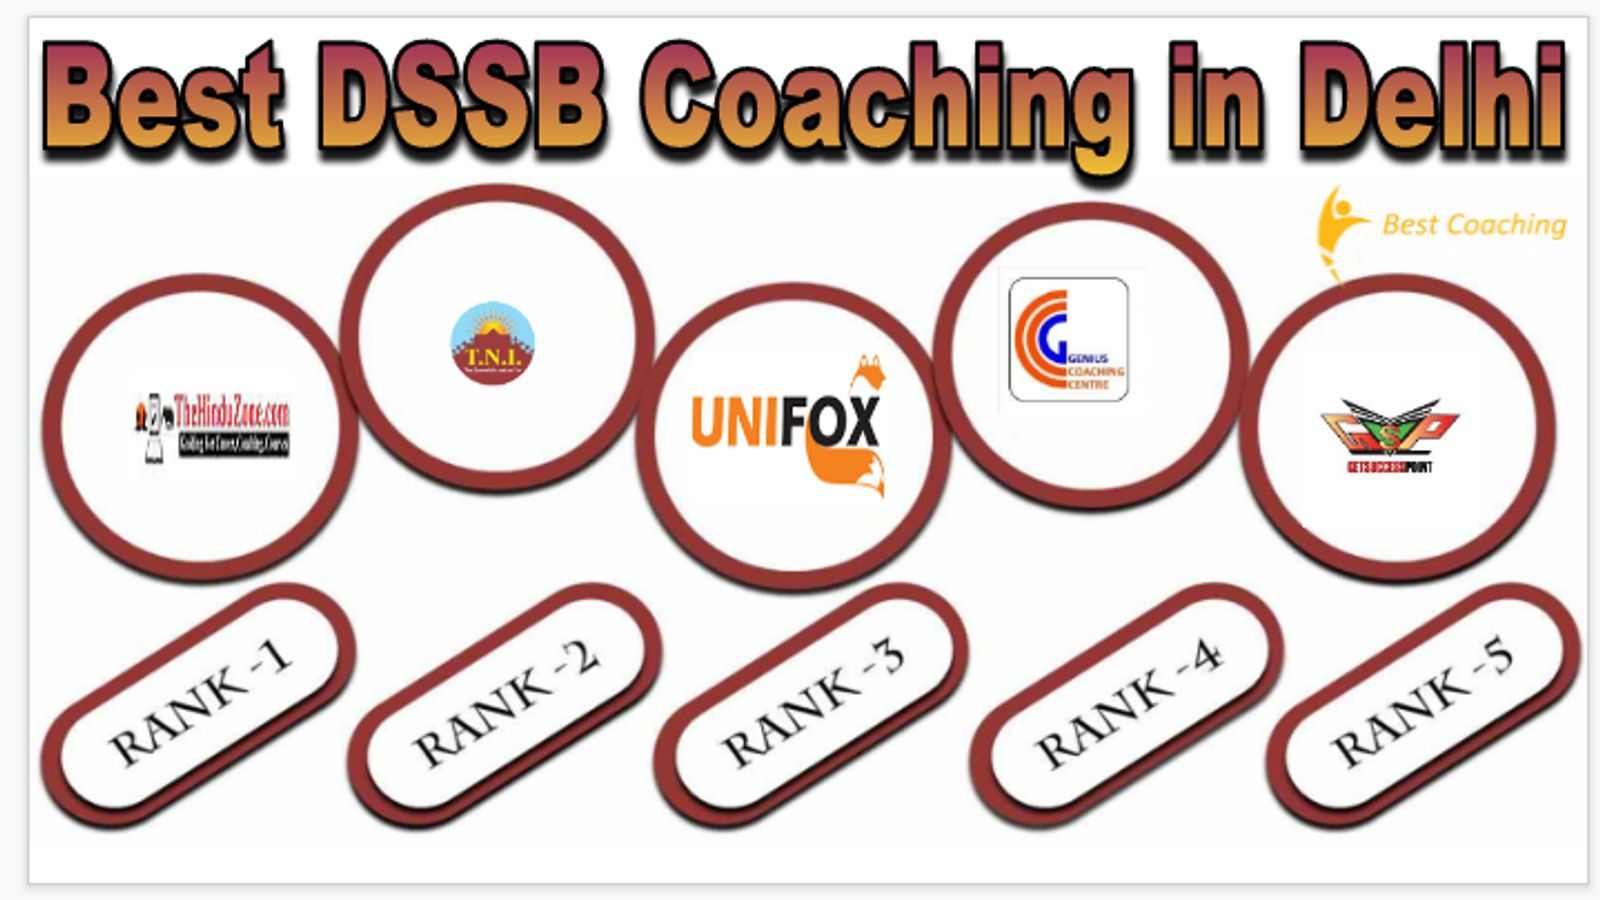 Best dsssb Coaching in Delhi